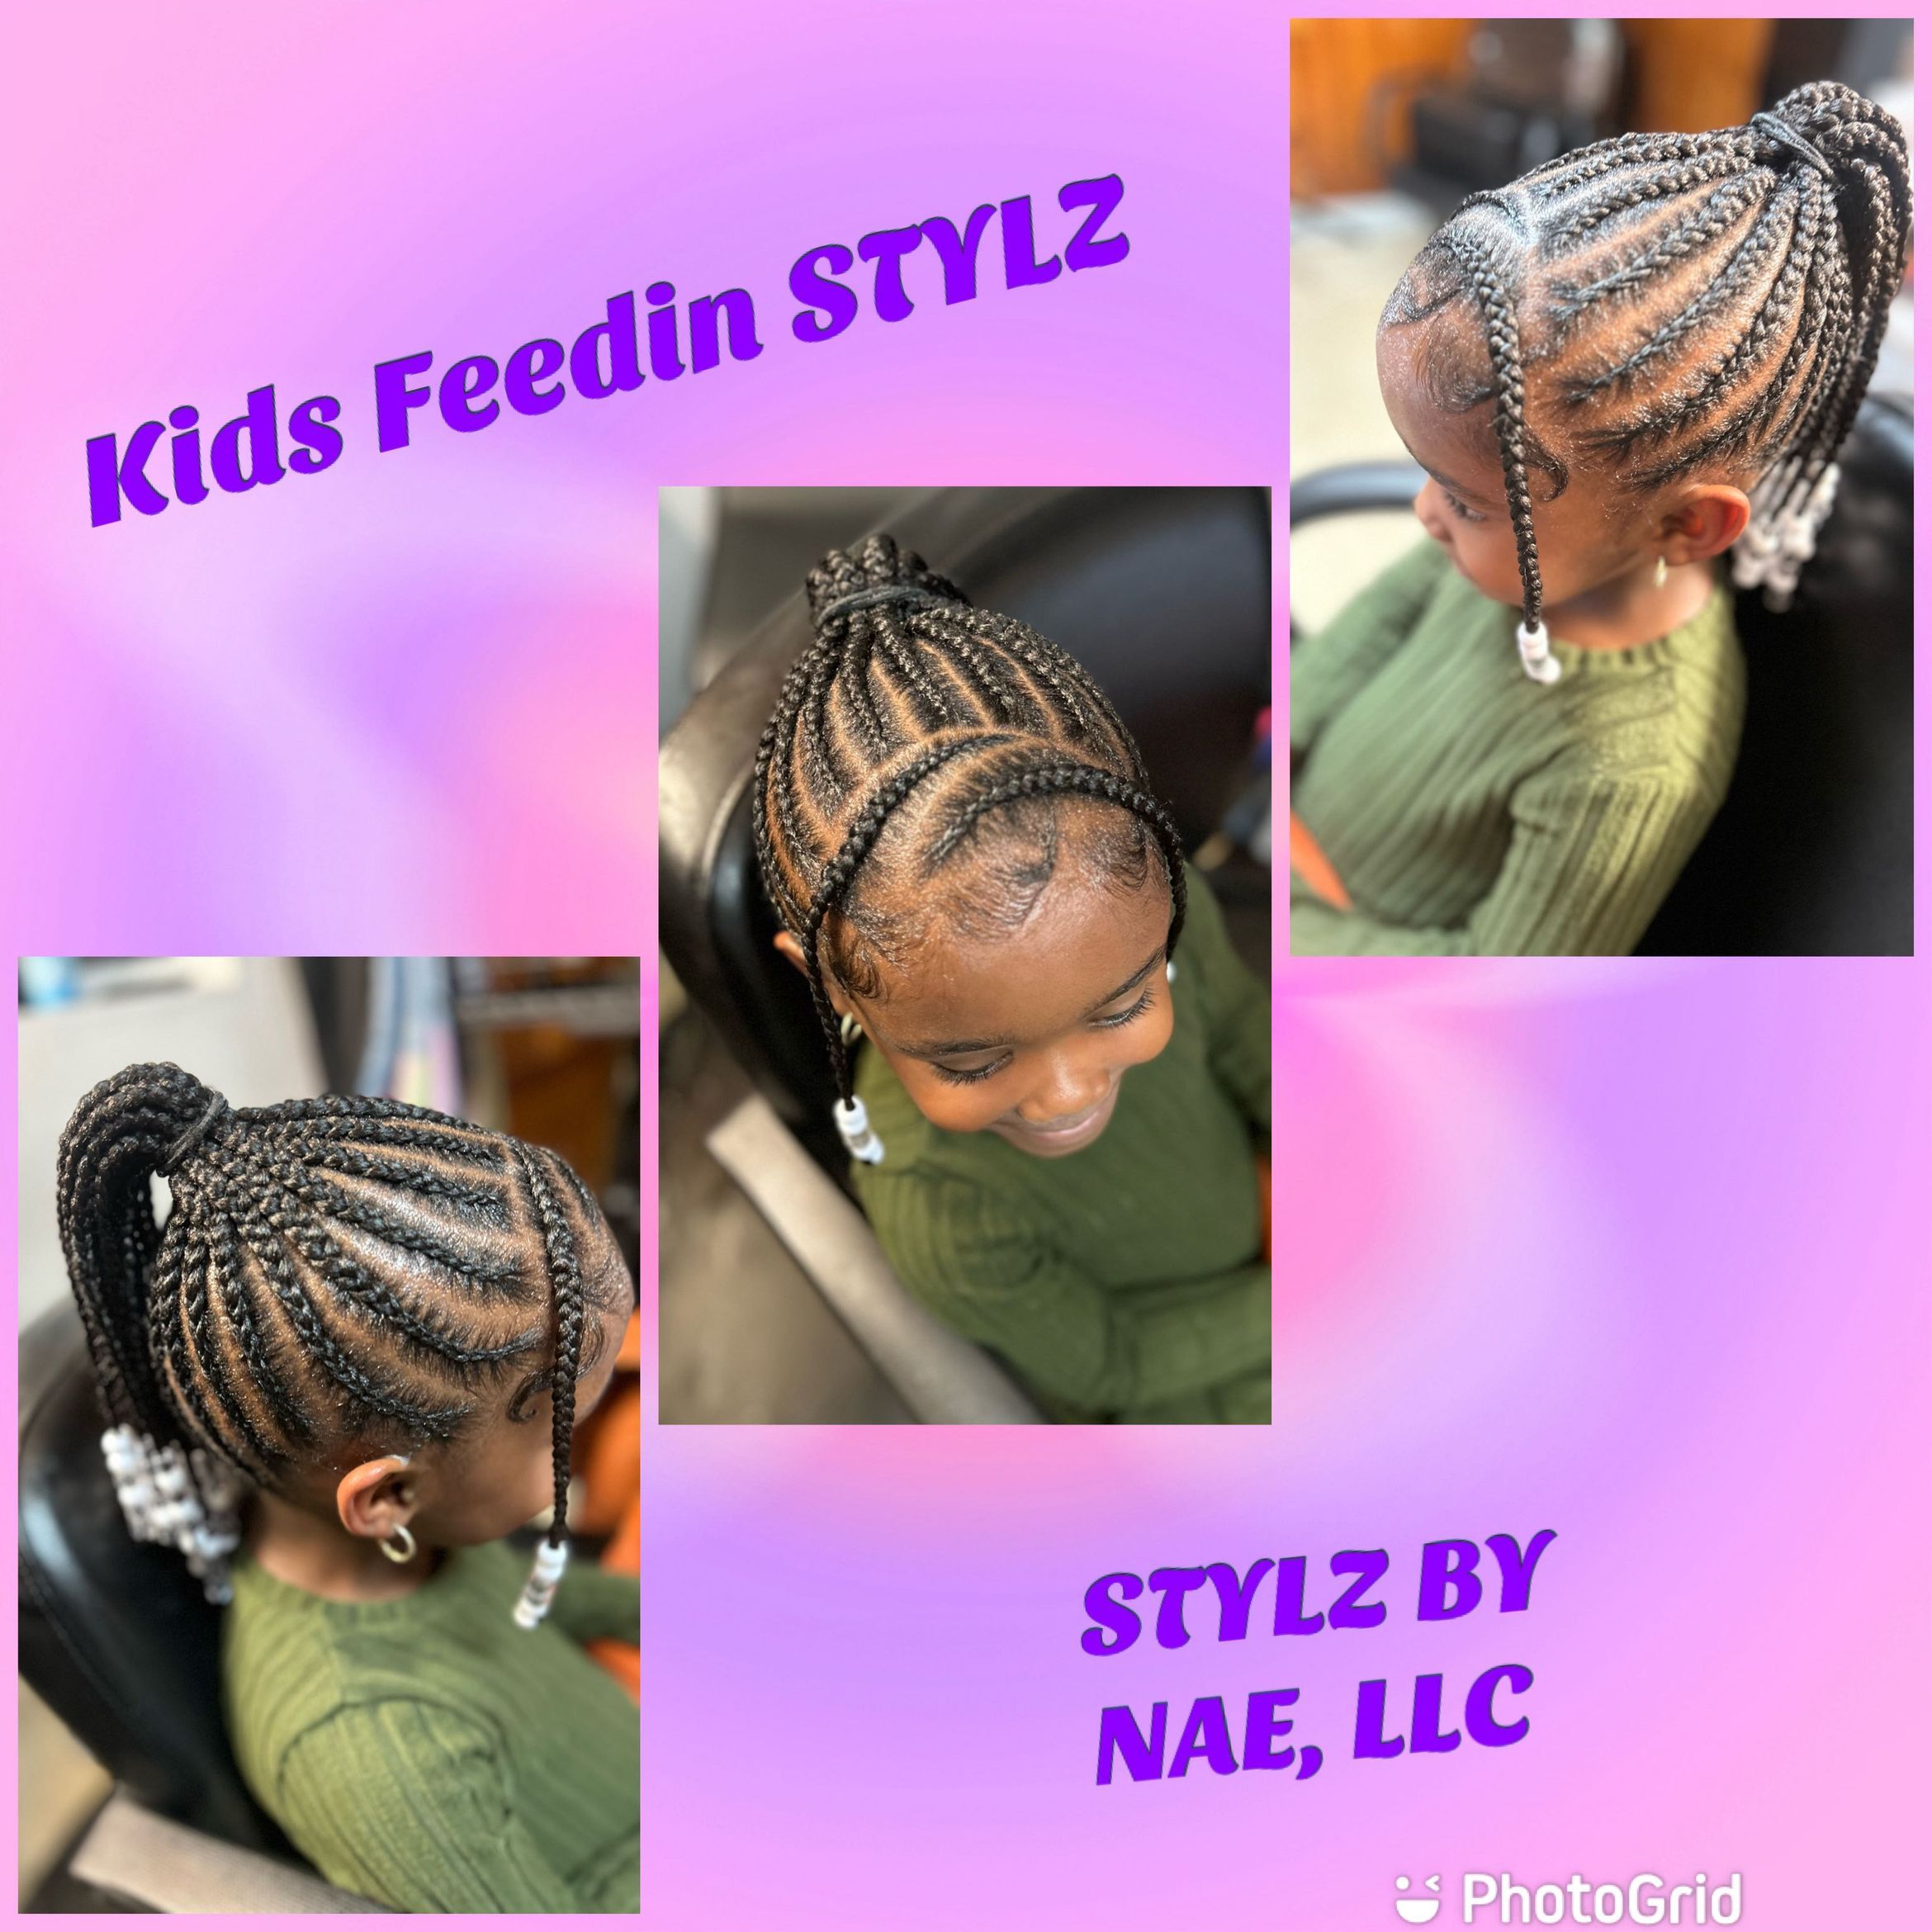 Kids Feedin braids portfolio